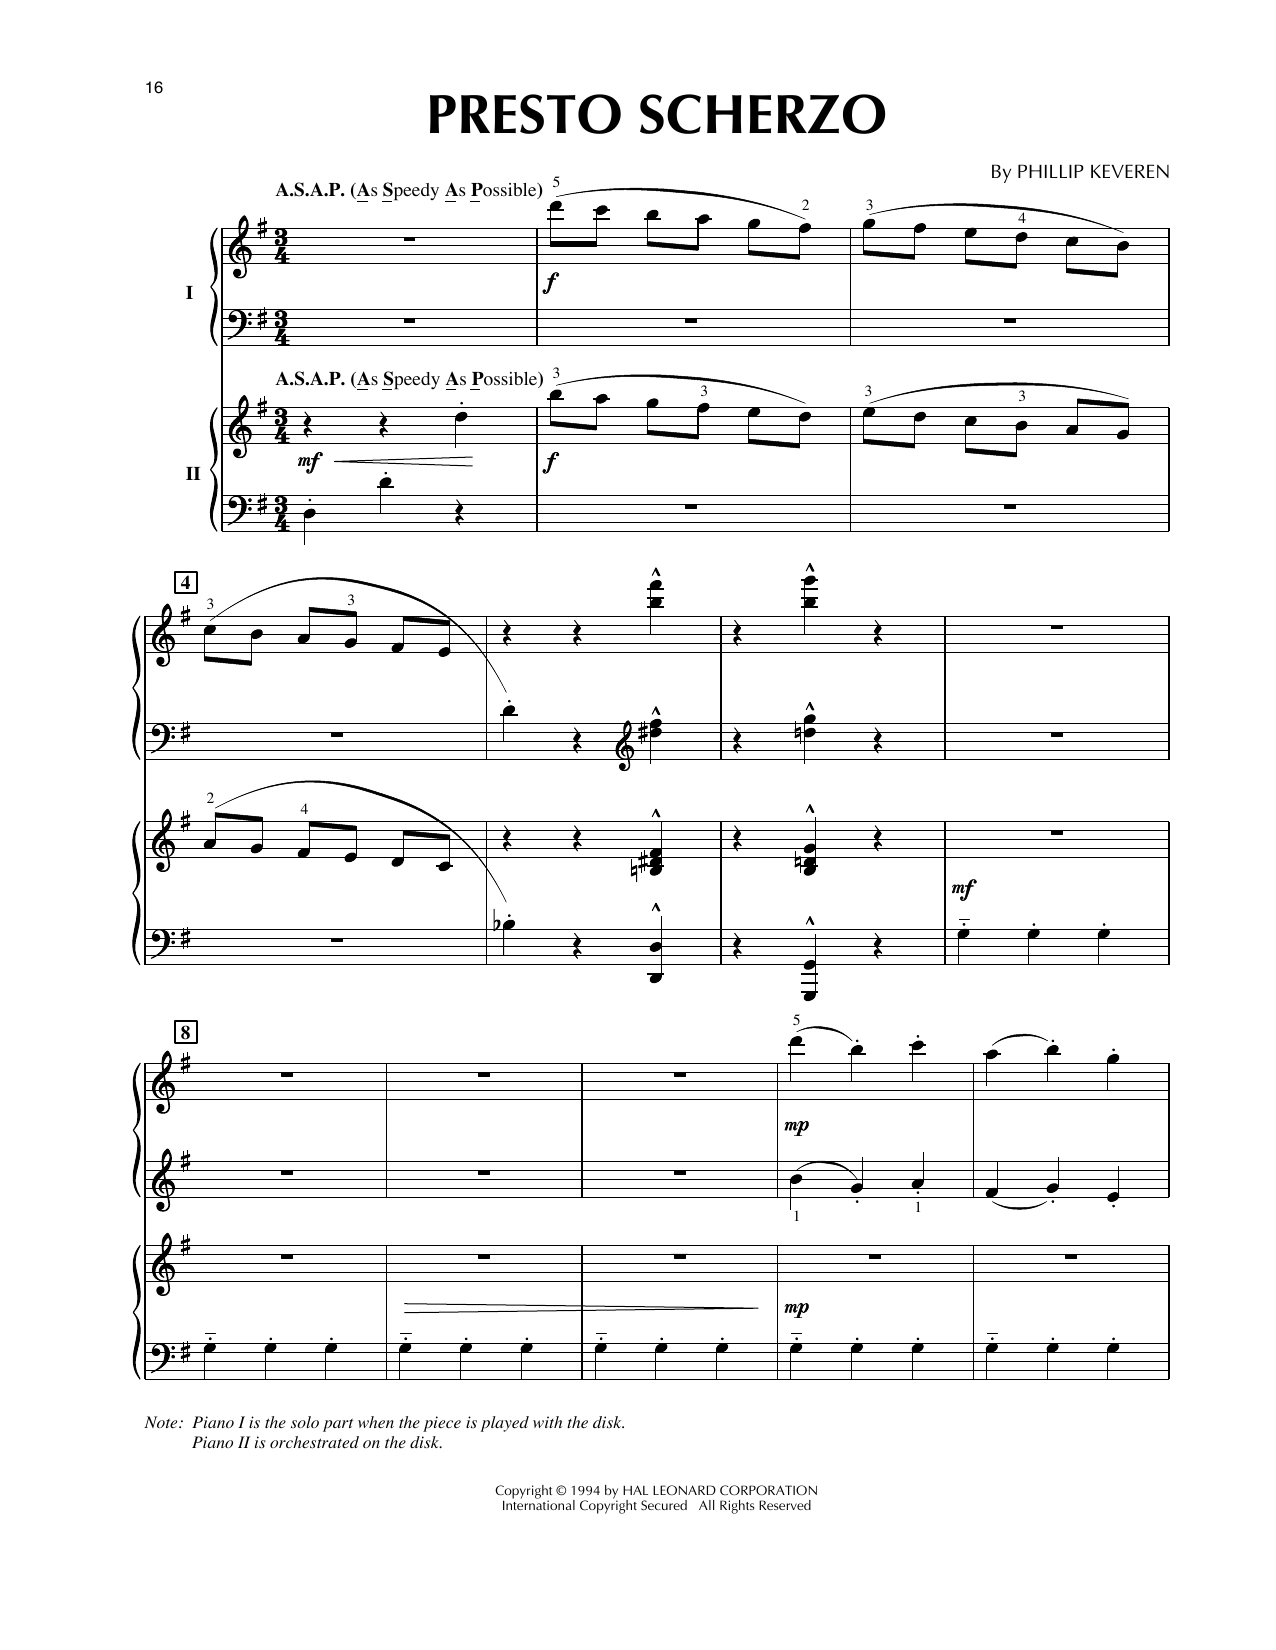 Phillip Keveren Presto Scherzo (from Presto Scherzo) (for 2 pianos) sheet music notes and chords arranged for Piano Duet